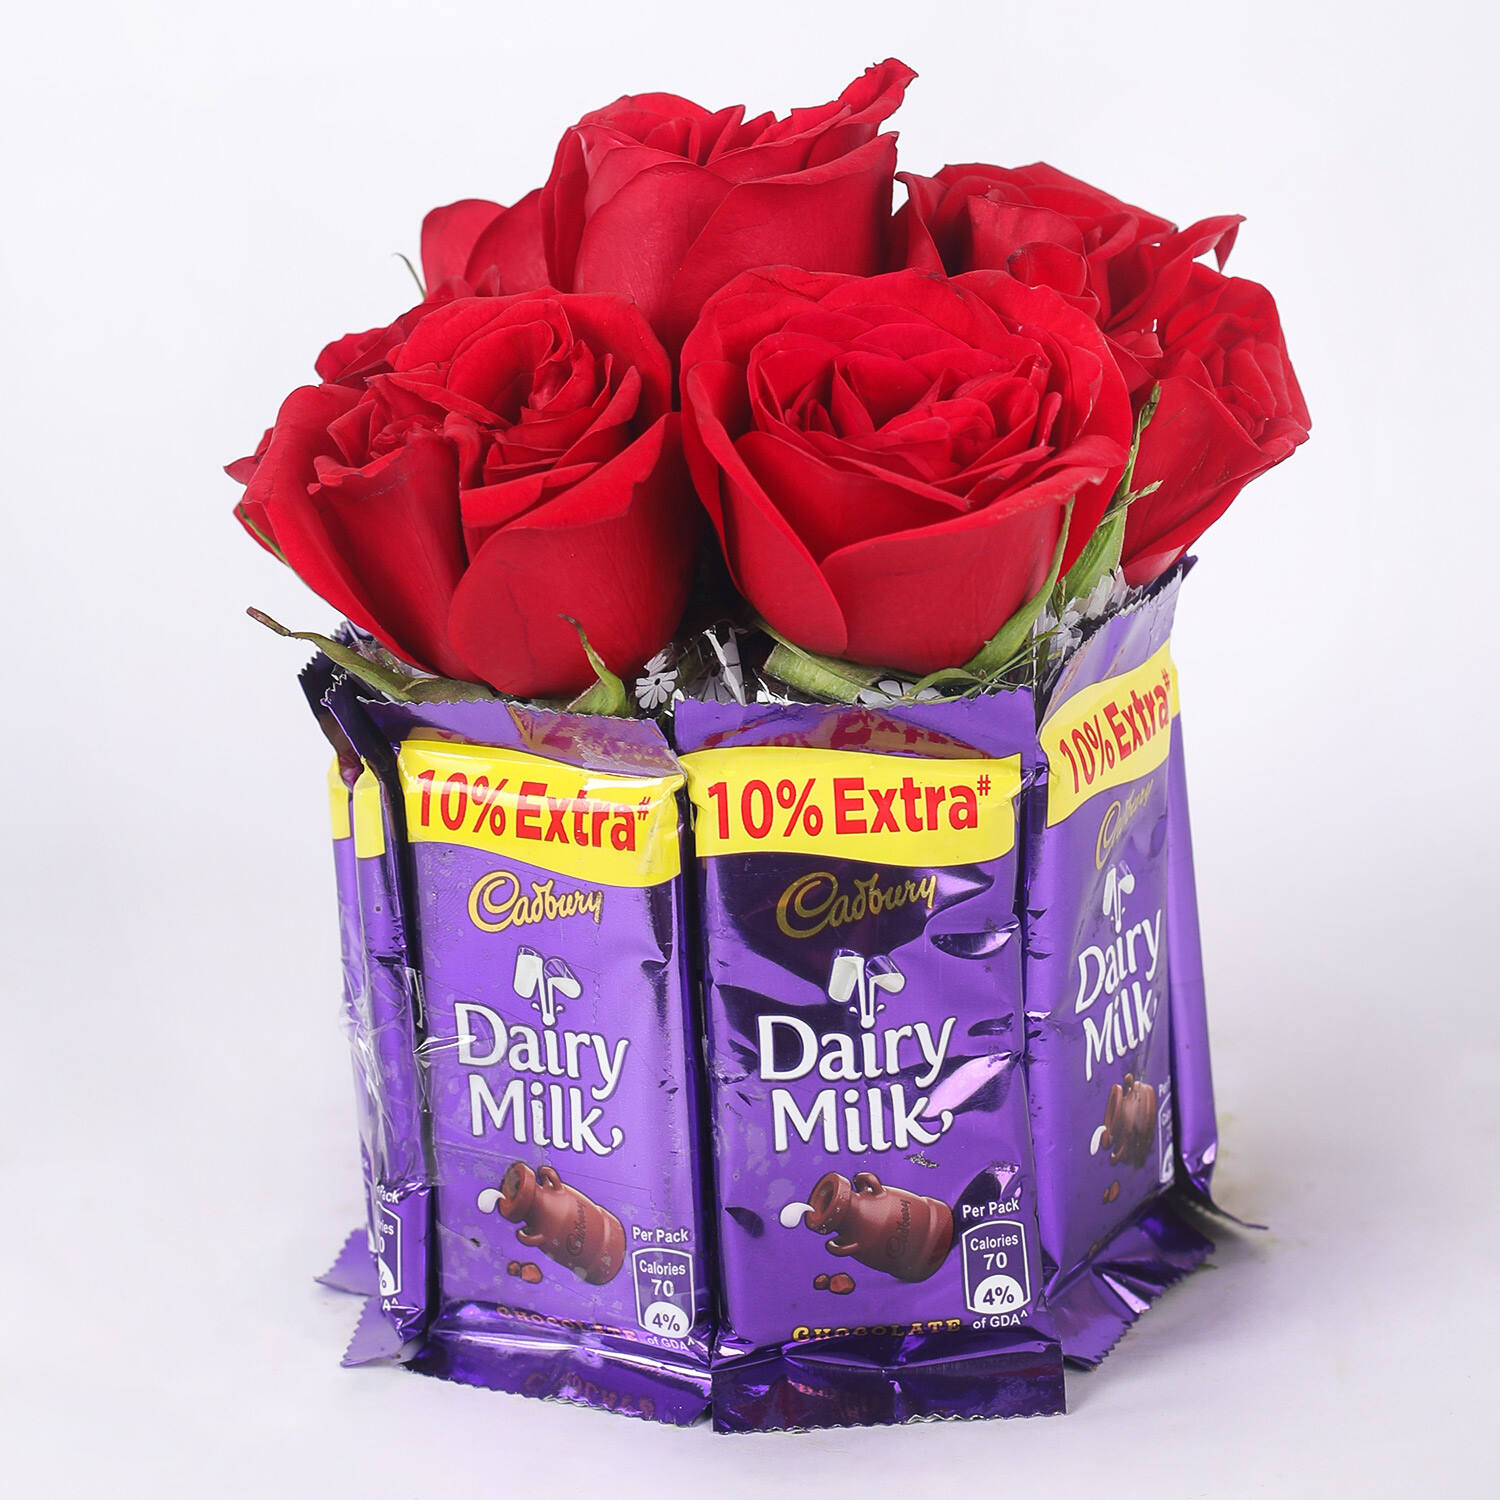 Premium Cadbury Chocolates in Gift Box: Gift/Send Gourmet Gifts Online  L11135882 |IGP.com